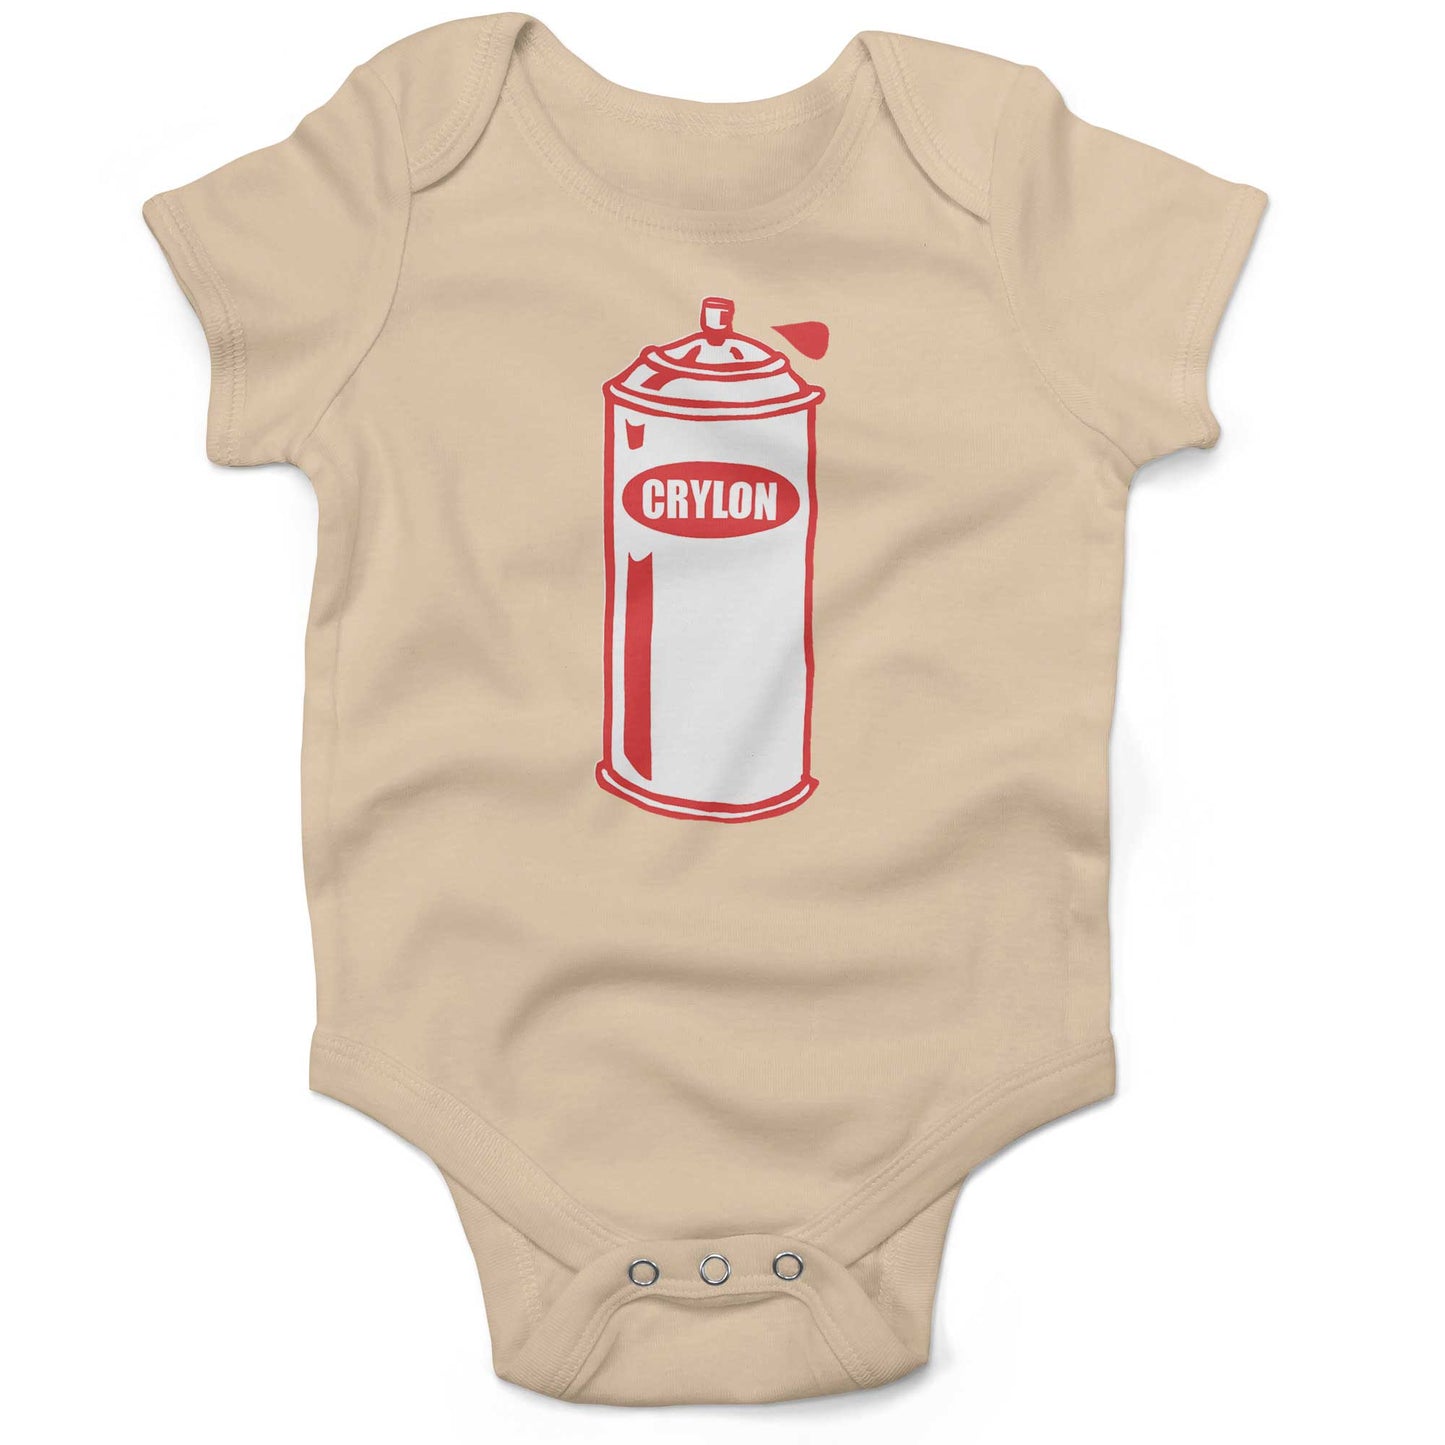 Crylon Cans Infant Bodysuit or Raglan Tee-Organic Natural-3-6 months